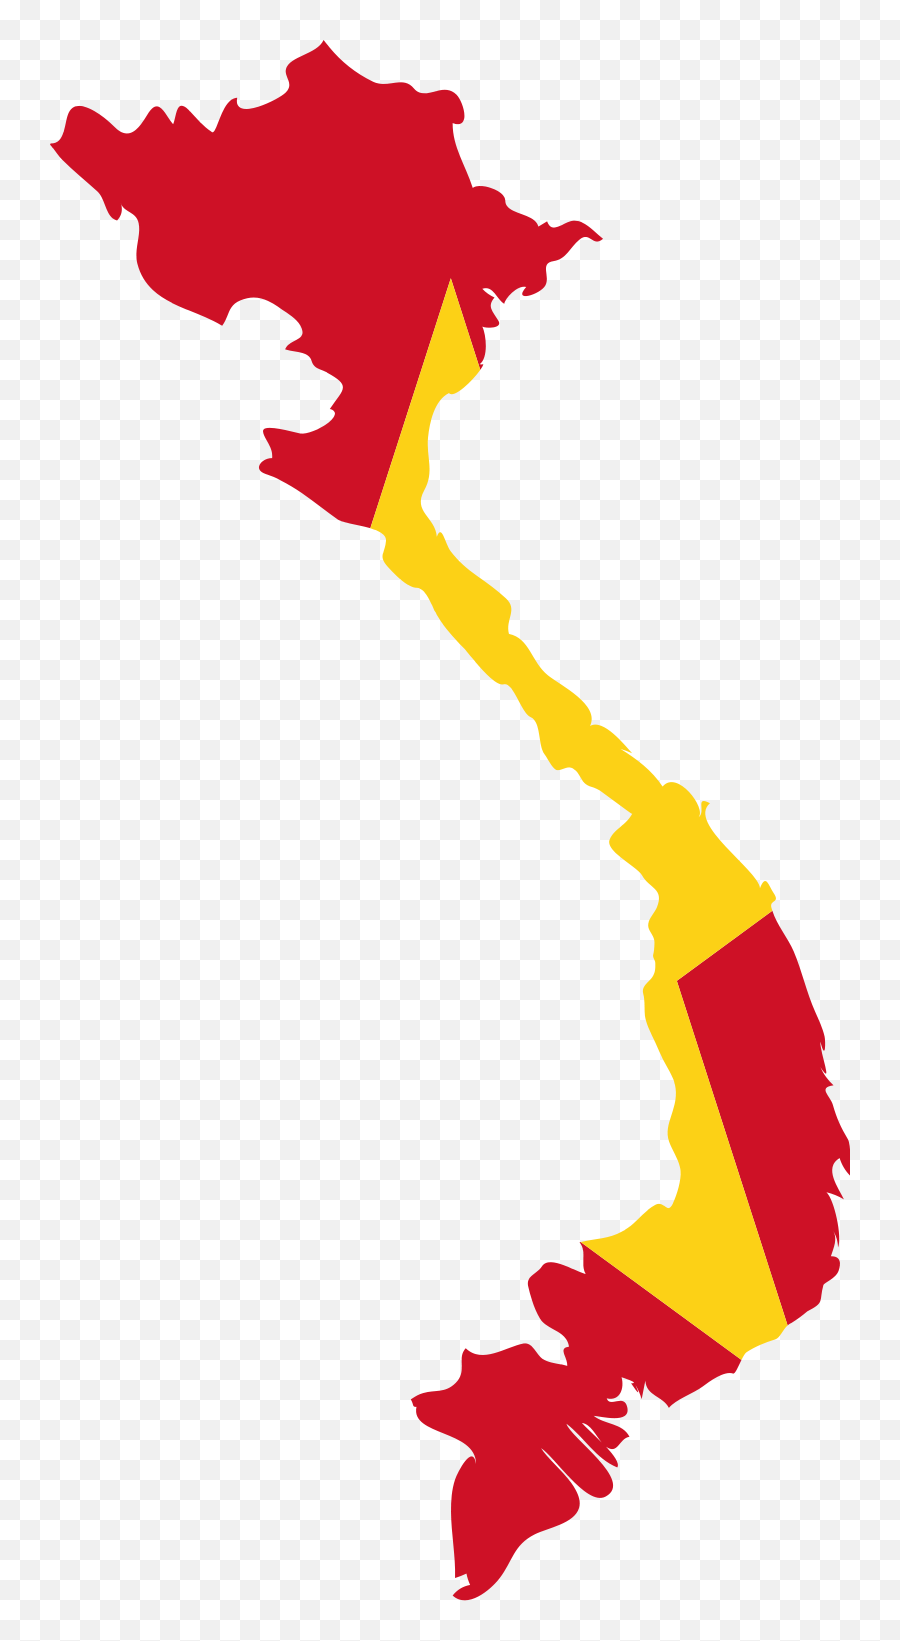 Map Of Vietnam Gharepeyma - Vietnam Flag Map Clipart Full Vietnam Map With Flag Emoji,Croatia Flag Emoji